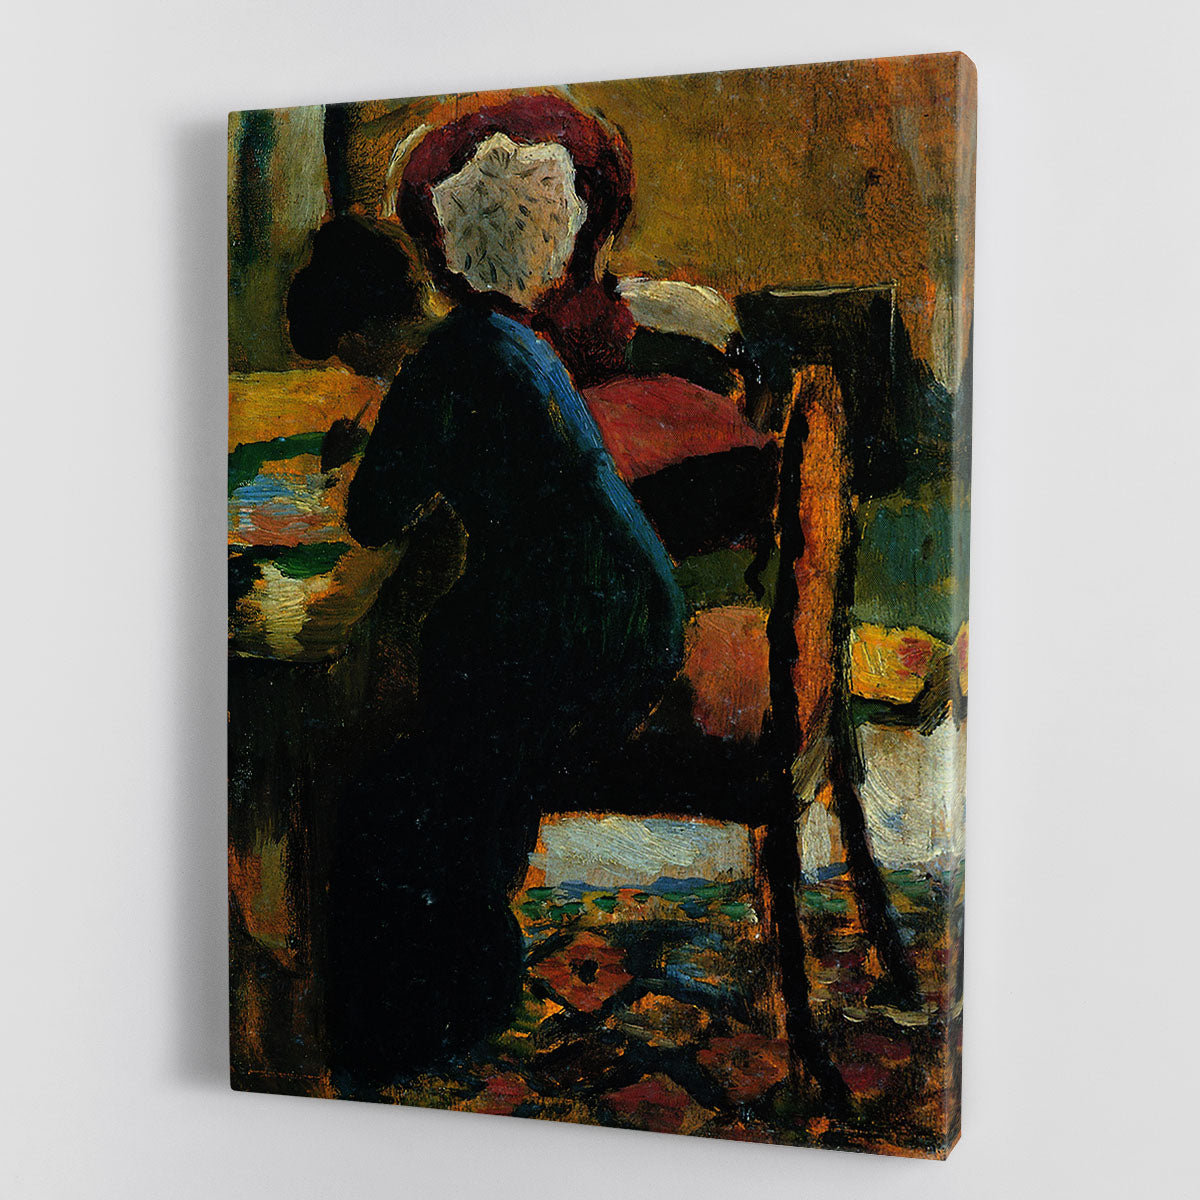 Elisabeth at the desk by Macke Canvas Print or Poster - Canvas Art Rocks - 1